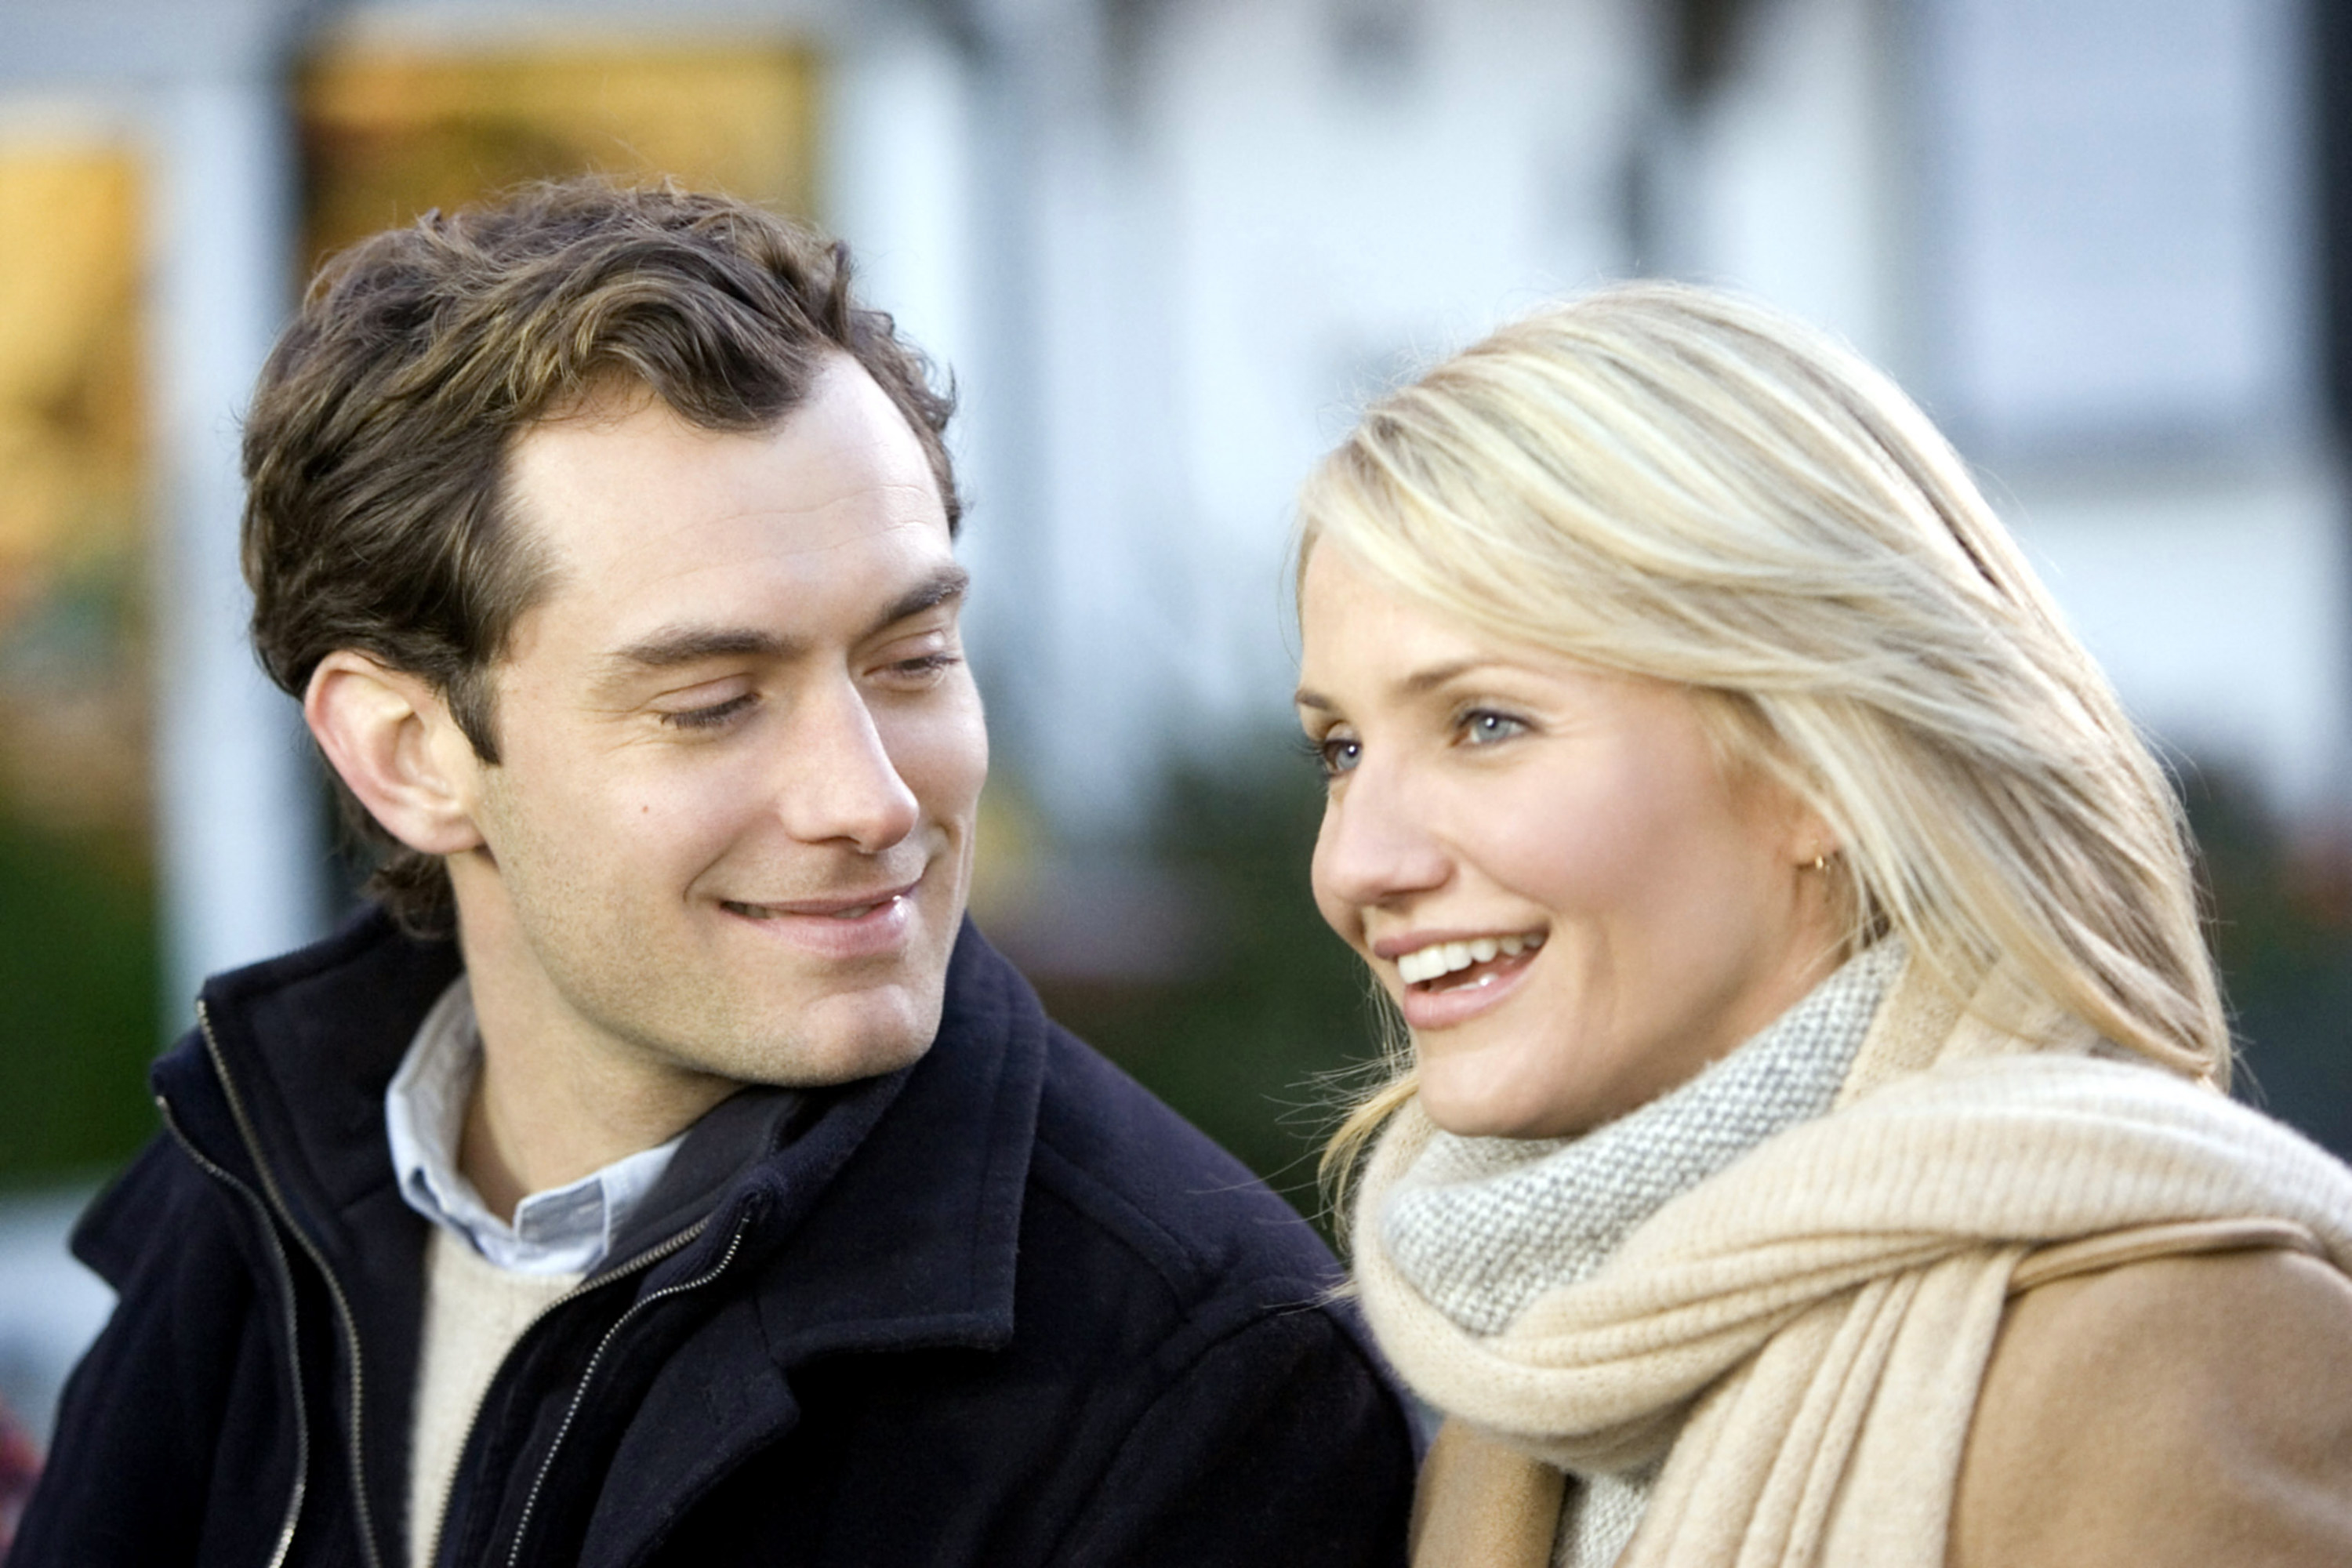 A man gazes lovingly at a blonde woman